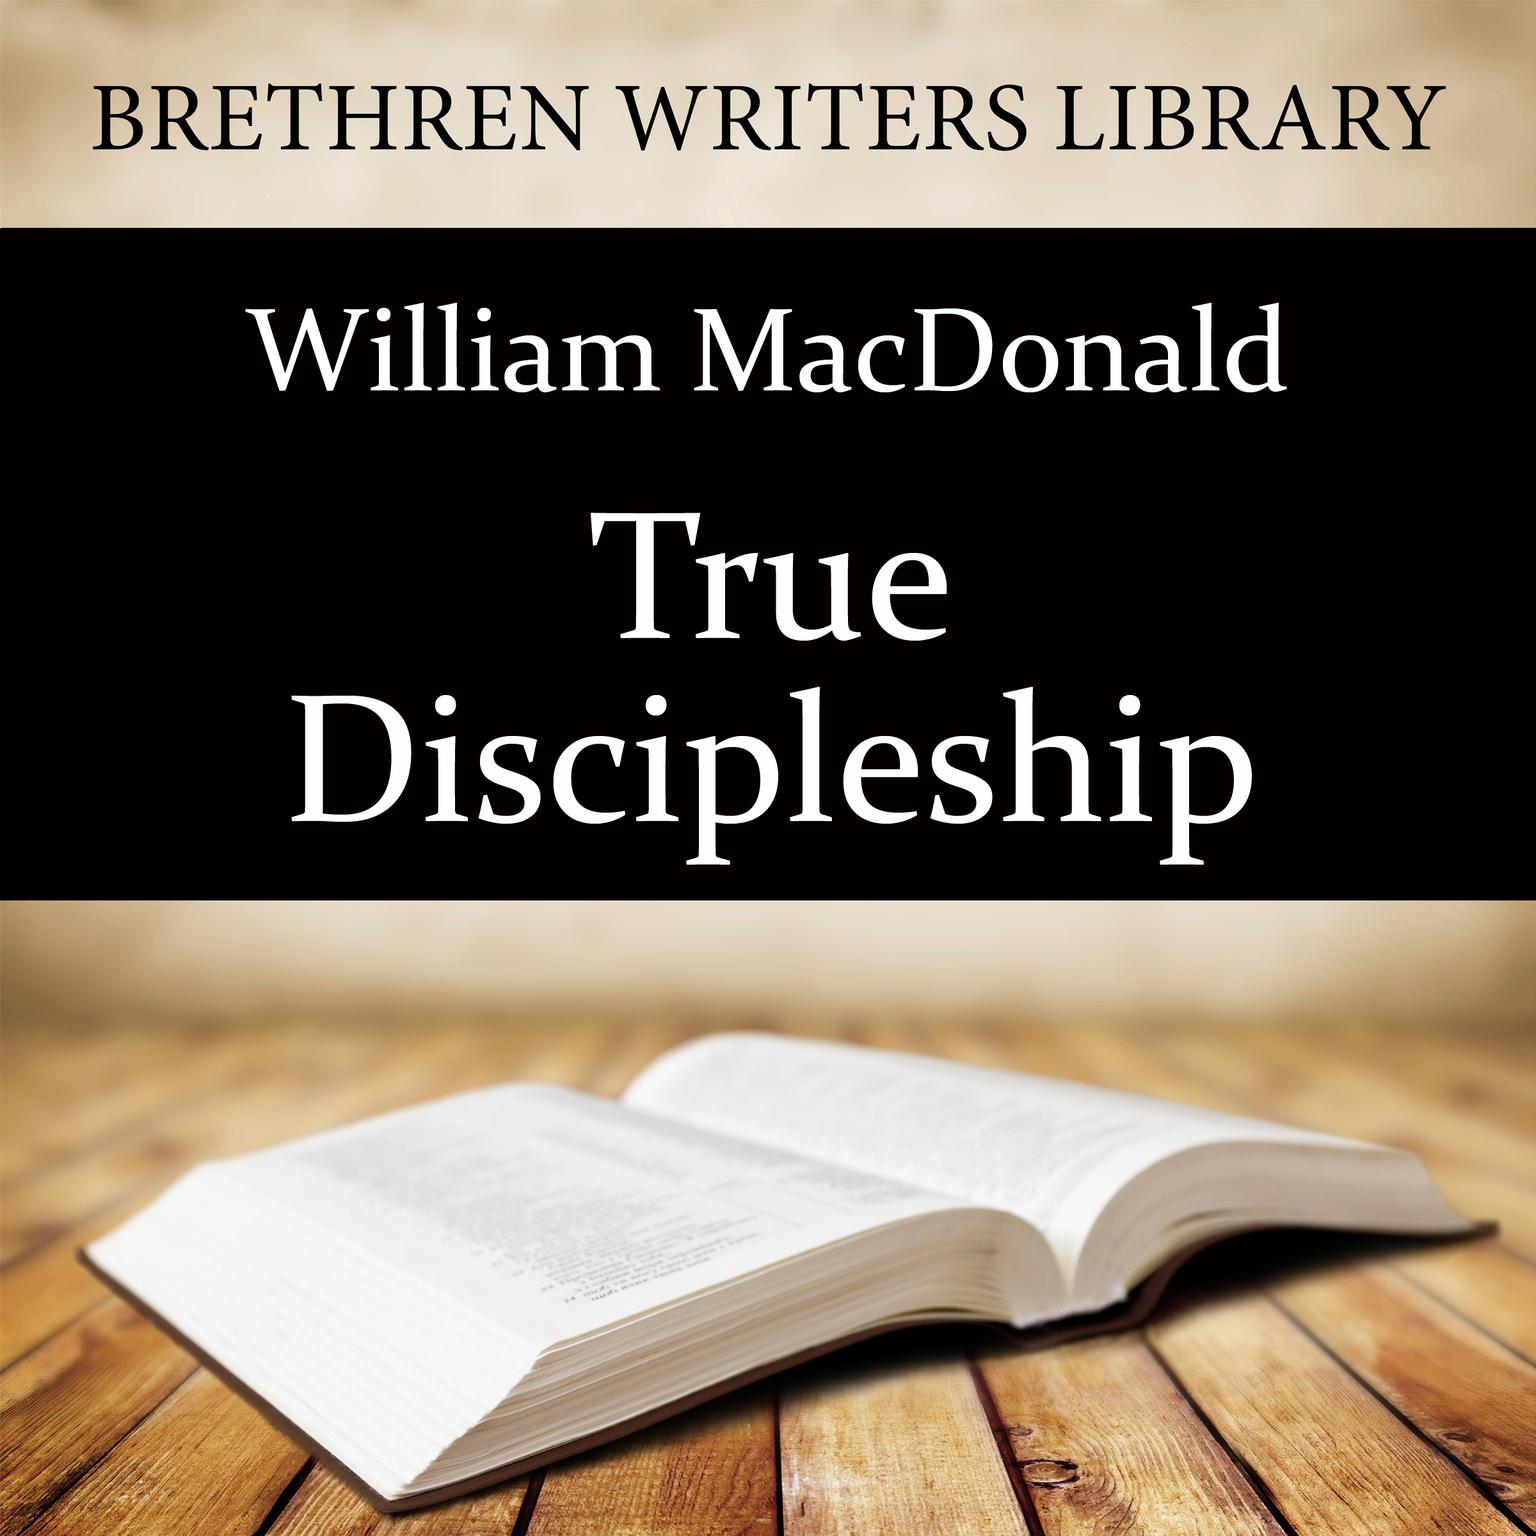 True Discipleship Audiobook, by William MacDonald